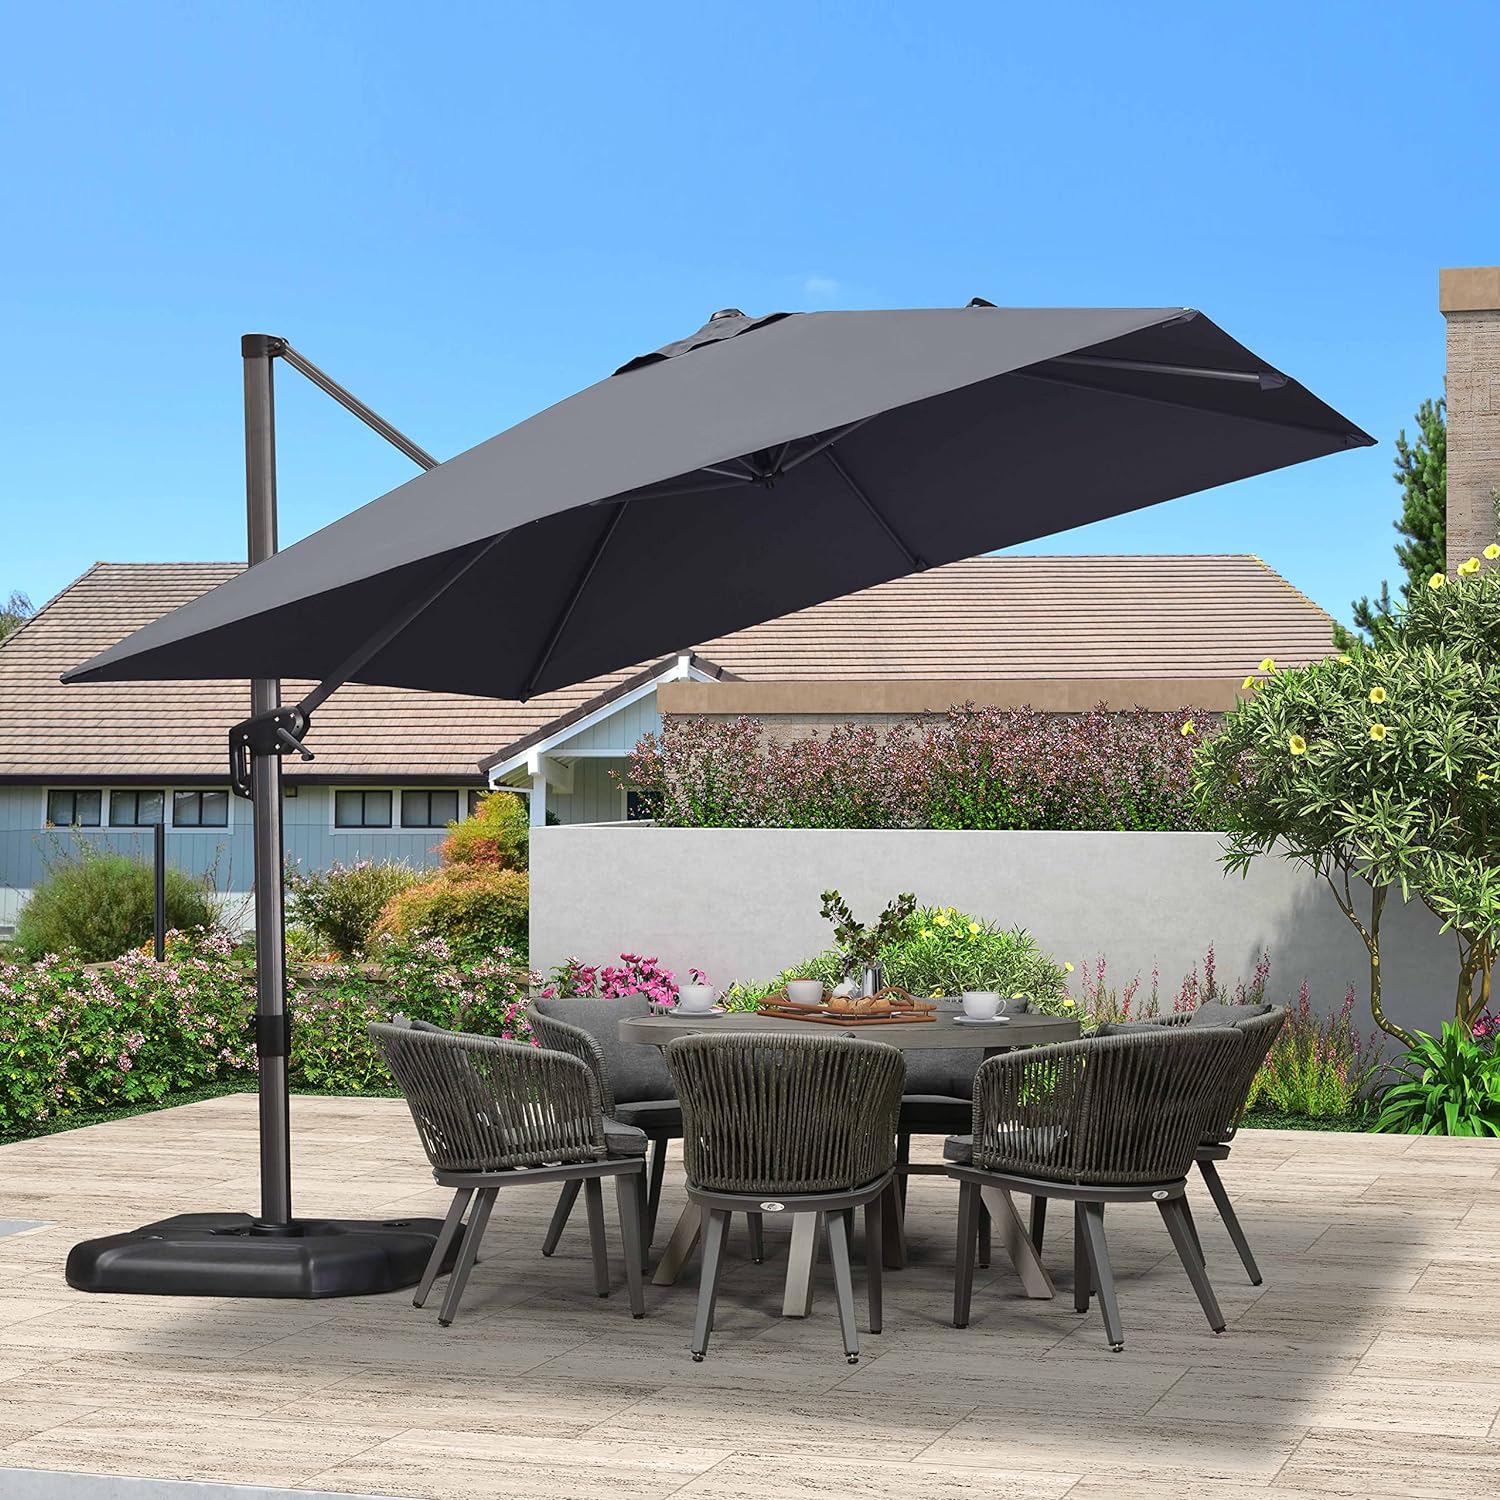 PURPLE LEAF 10 ft Square Aluminum 360-degree Rotation Offset Cantilever Umbrella Patio Outdoor Umbrella for Garden Deck Pool Patio, Gray